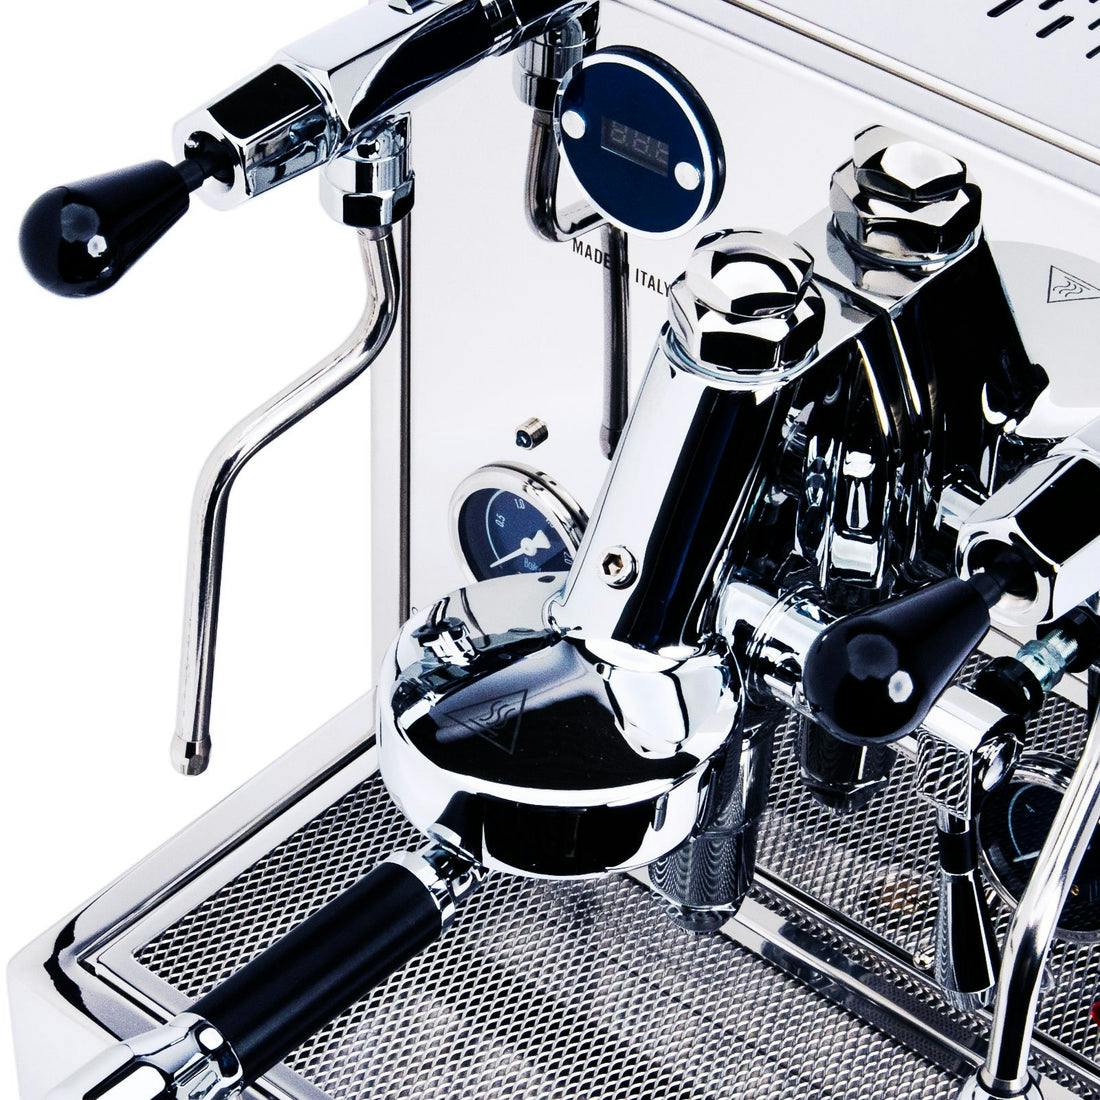 Lucca M58 Espresso Machine with Flow Control